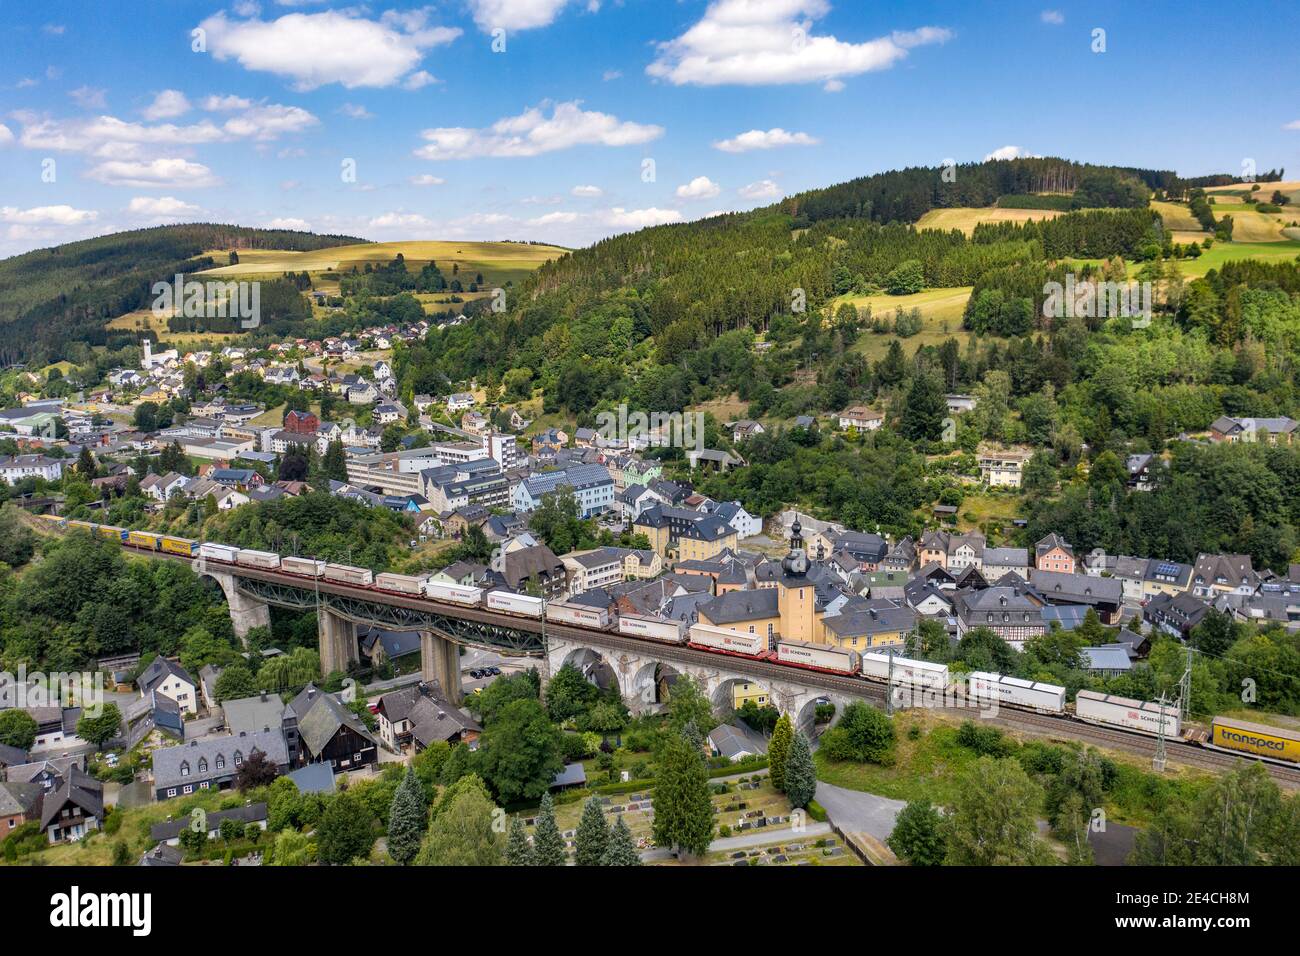 Germany, Bavaria, Ludwigsstadt, train, bridge, city, church, houses, aerial view Stock Photo